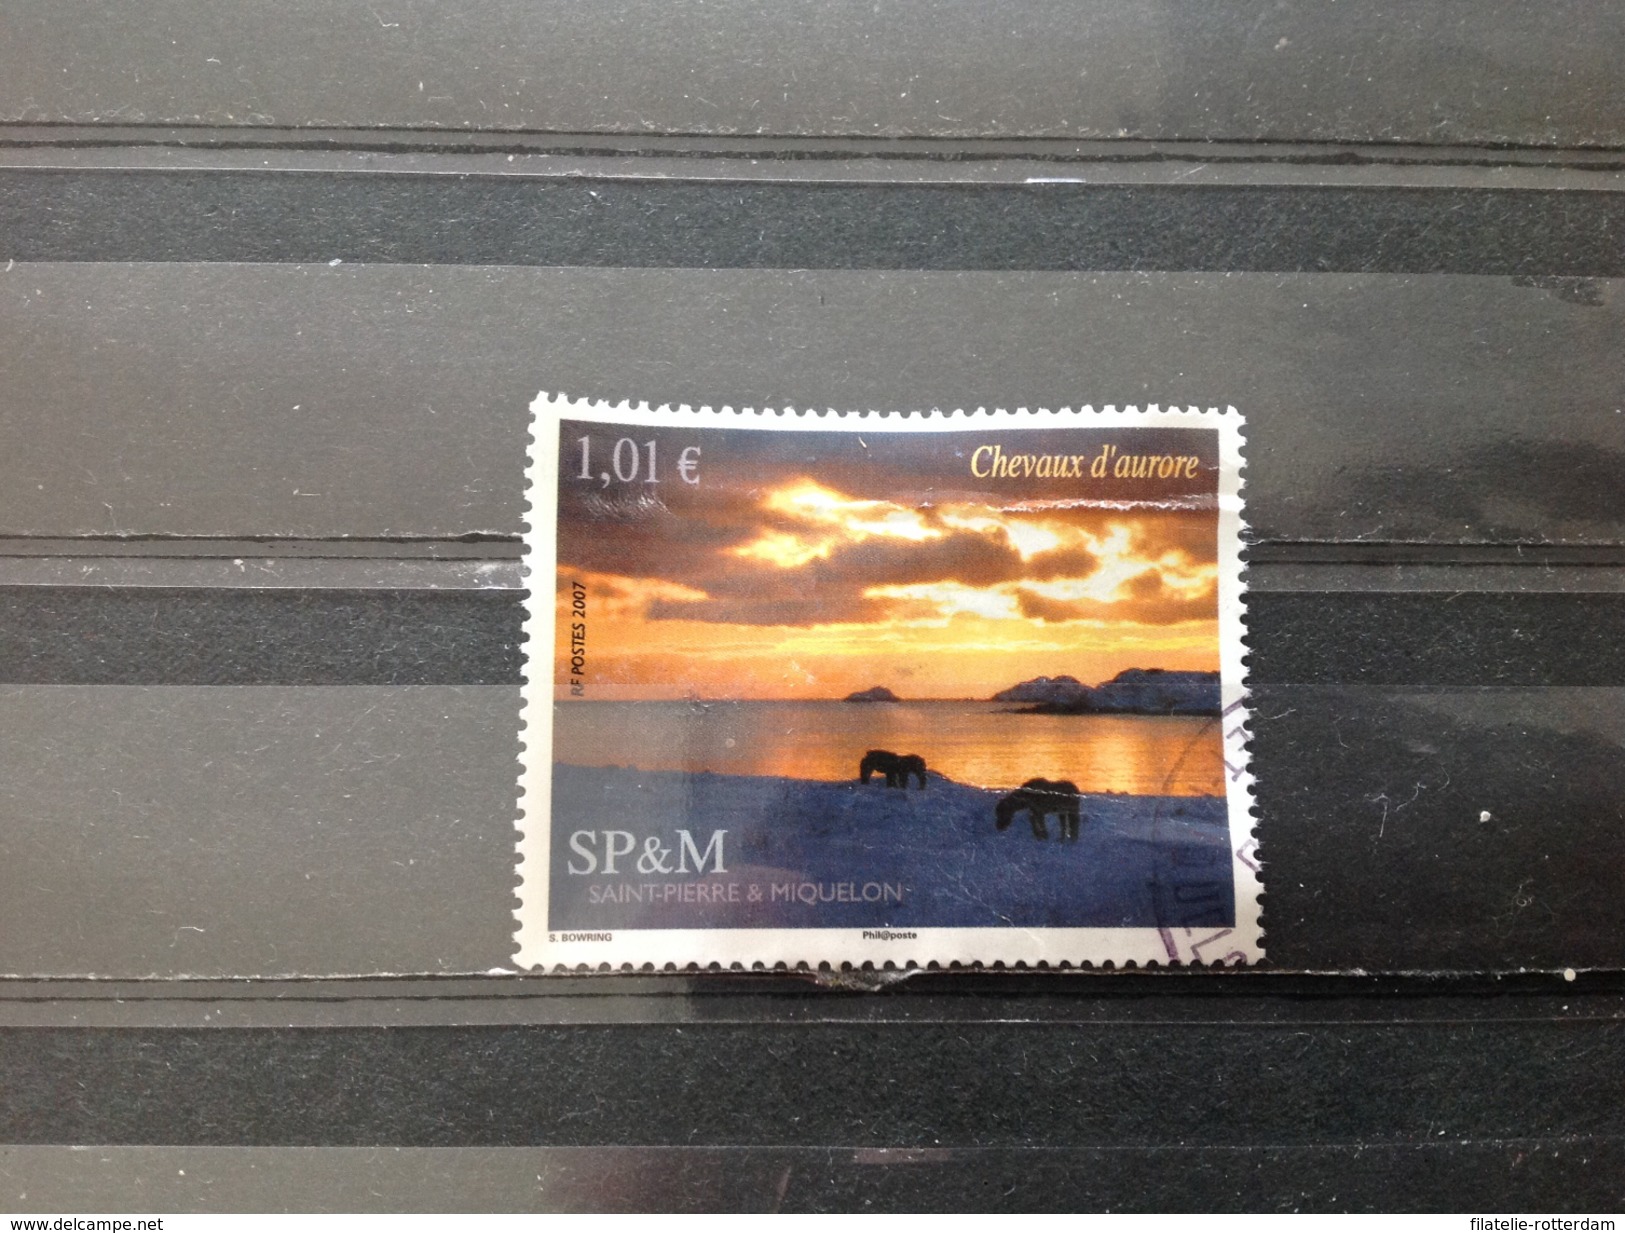 Saint-Pierre Et Miquelon - Paarden Van Aurora (1.01) 2007 Very Rare! - Used Stamps